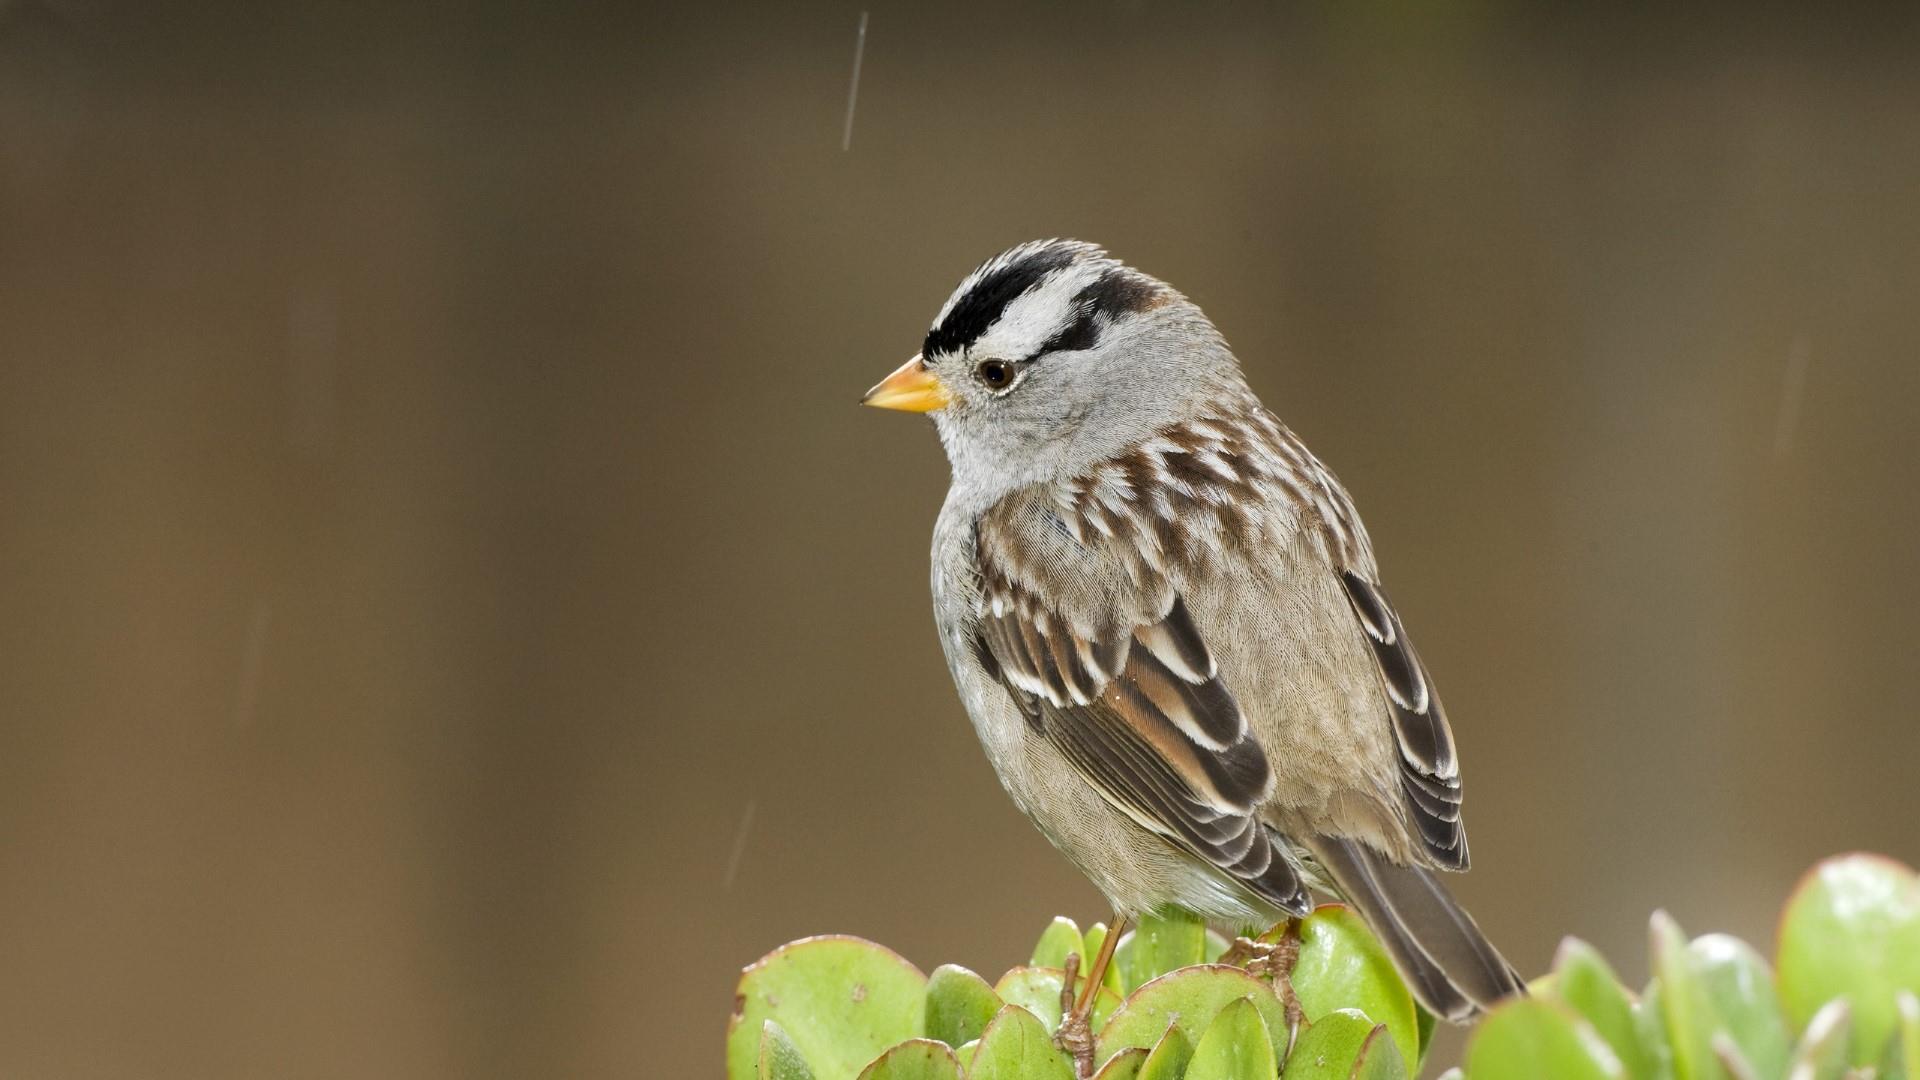 Cute Sparrow Bird In The Rain - Nature Photography Wallpaper ...